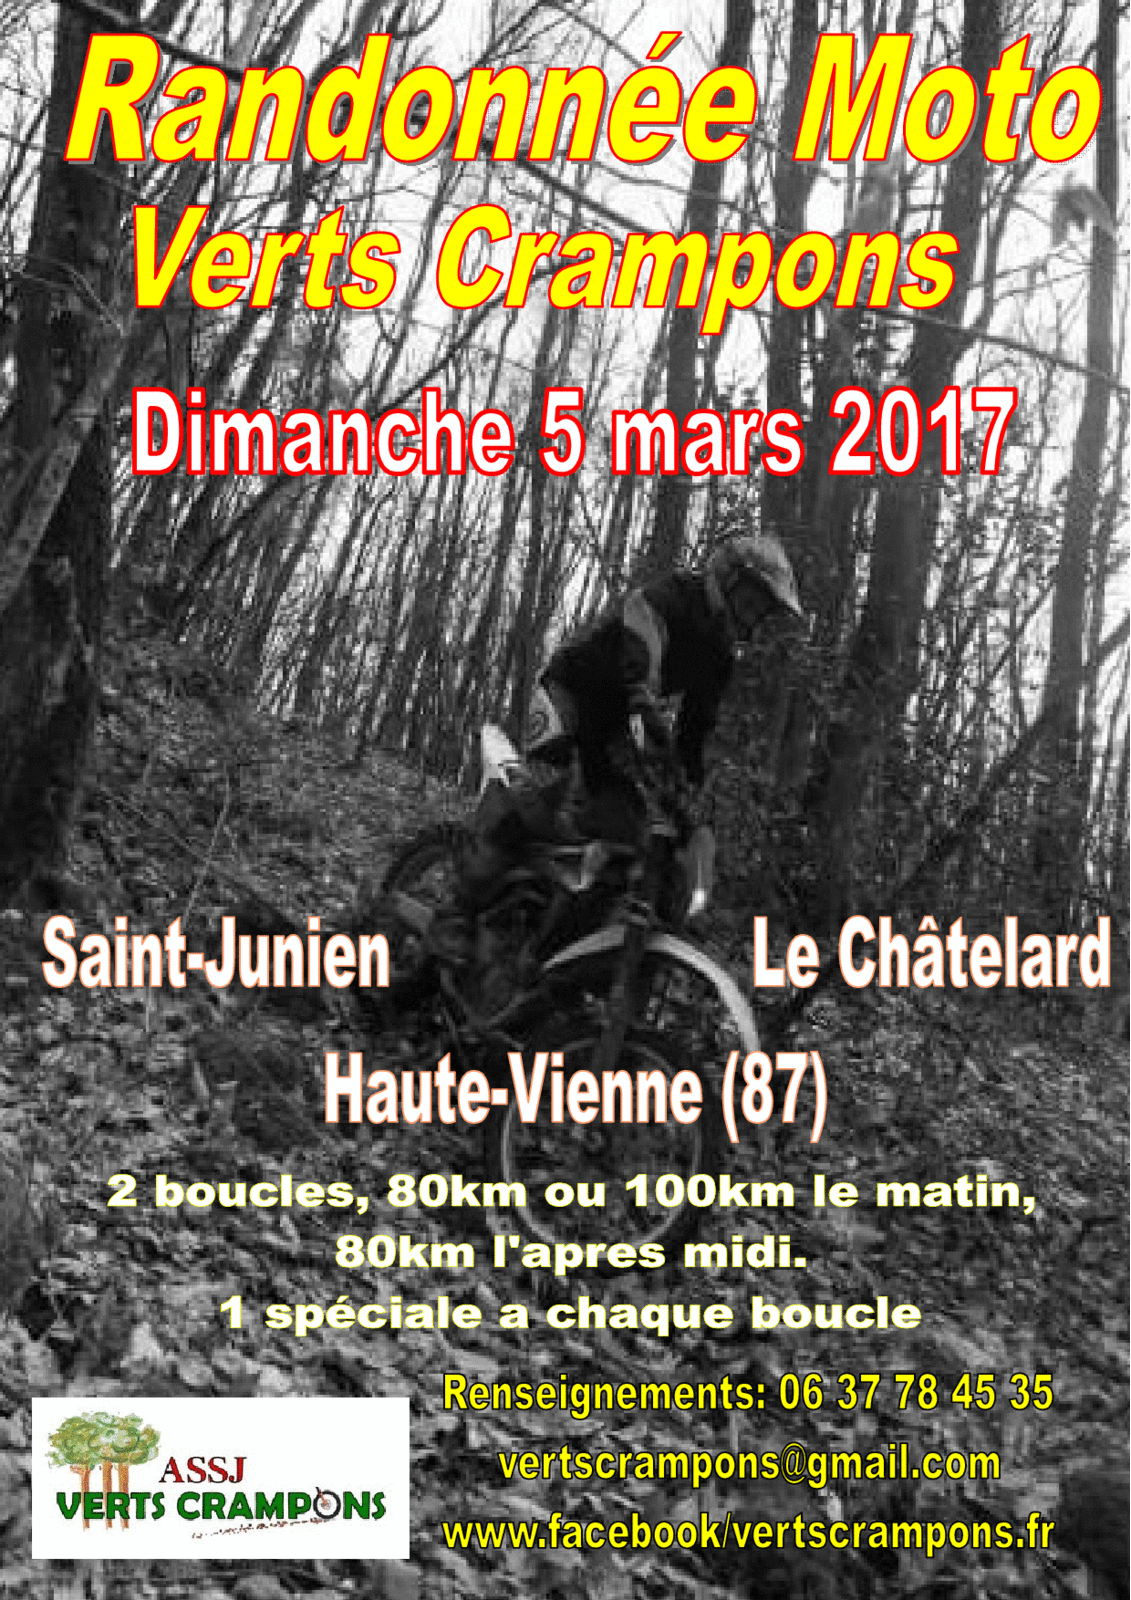 Rando moto l’ASSJ Verts Crampons Junien (87), dimanche mars 2017